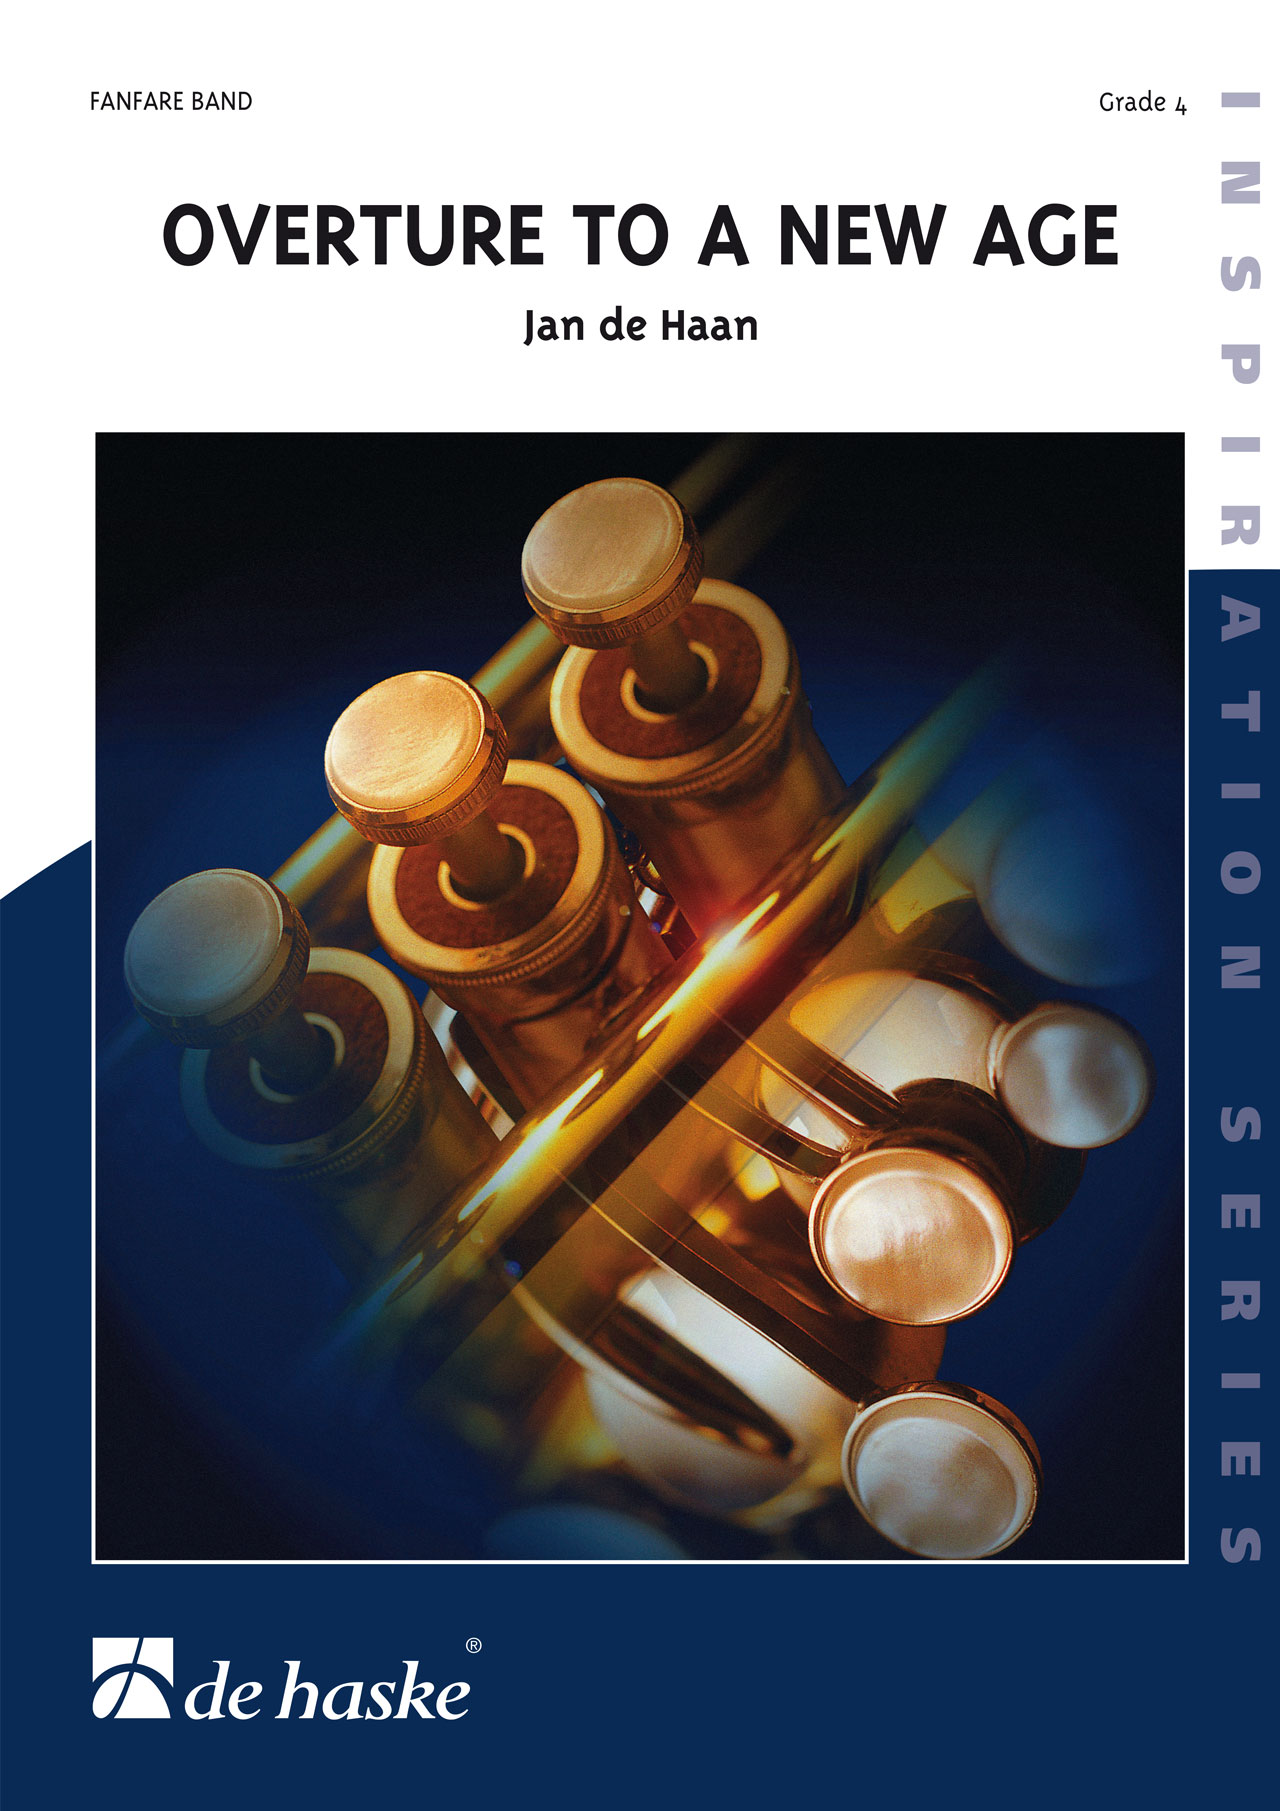 Jan de Haan: Overture to a New Age: Fanfare Band: Score & Parts